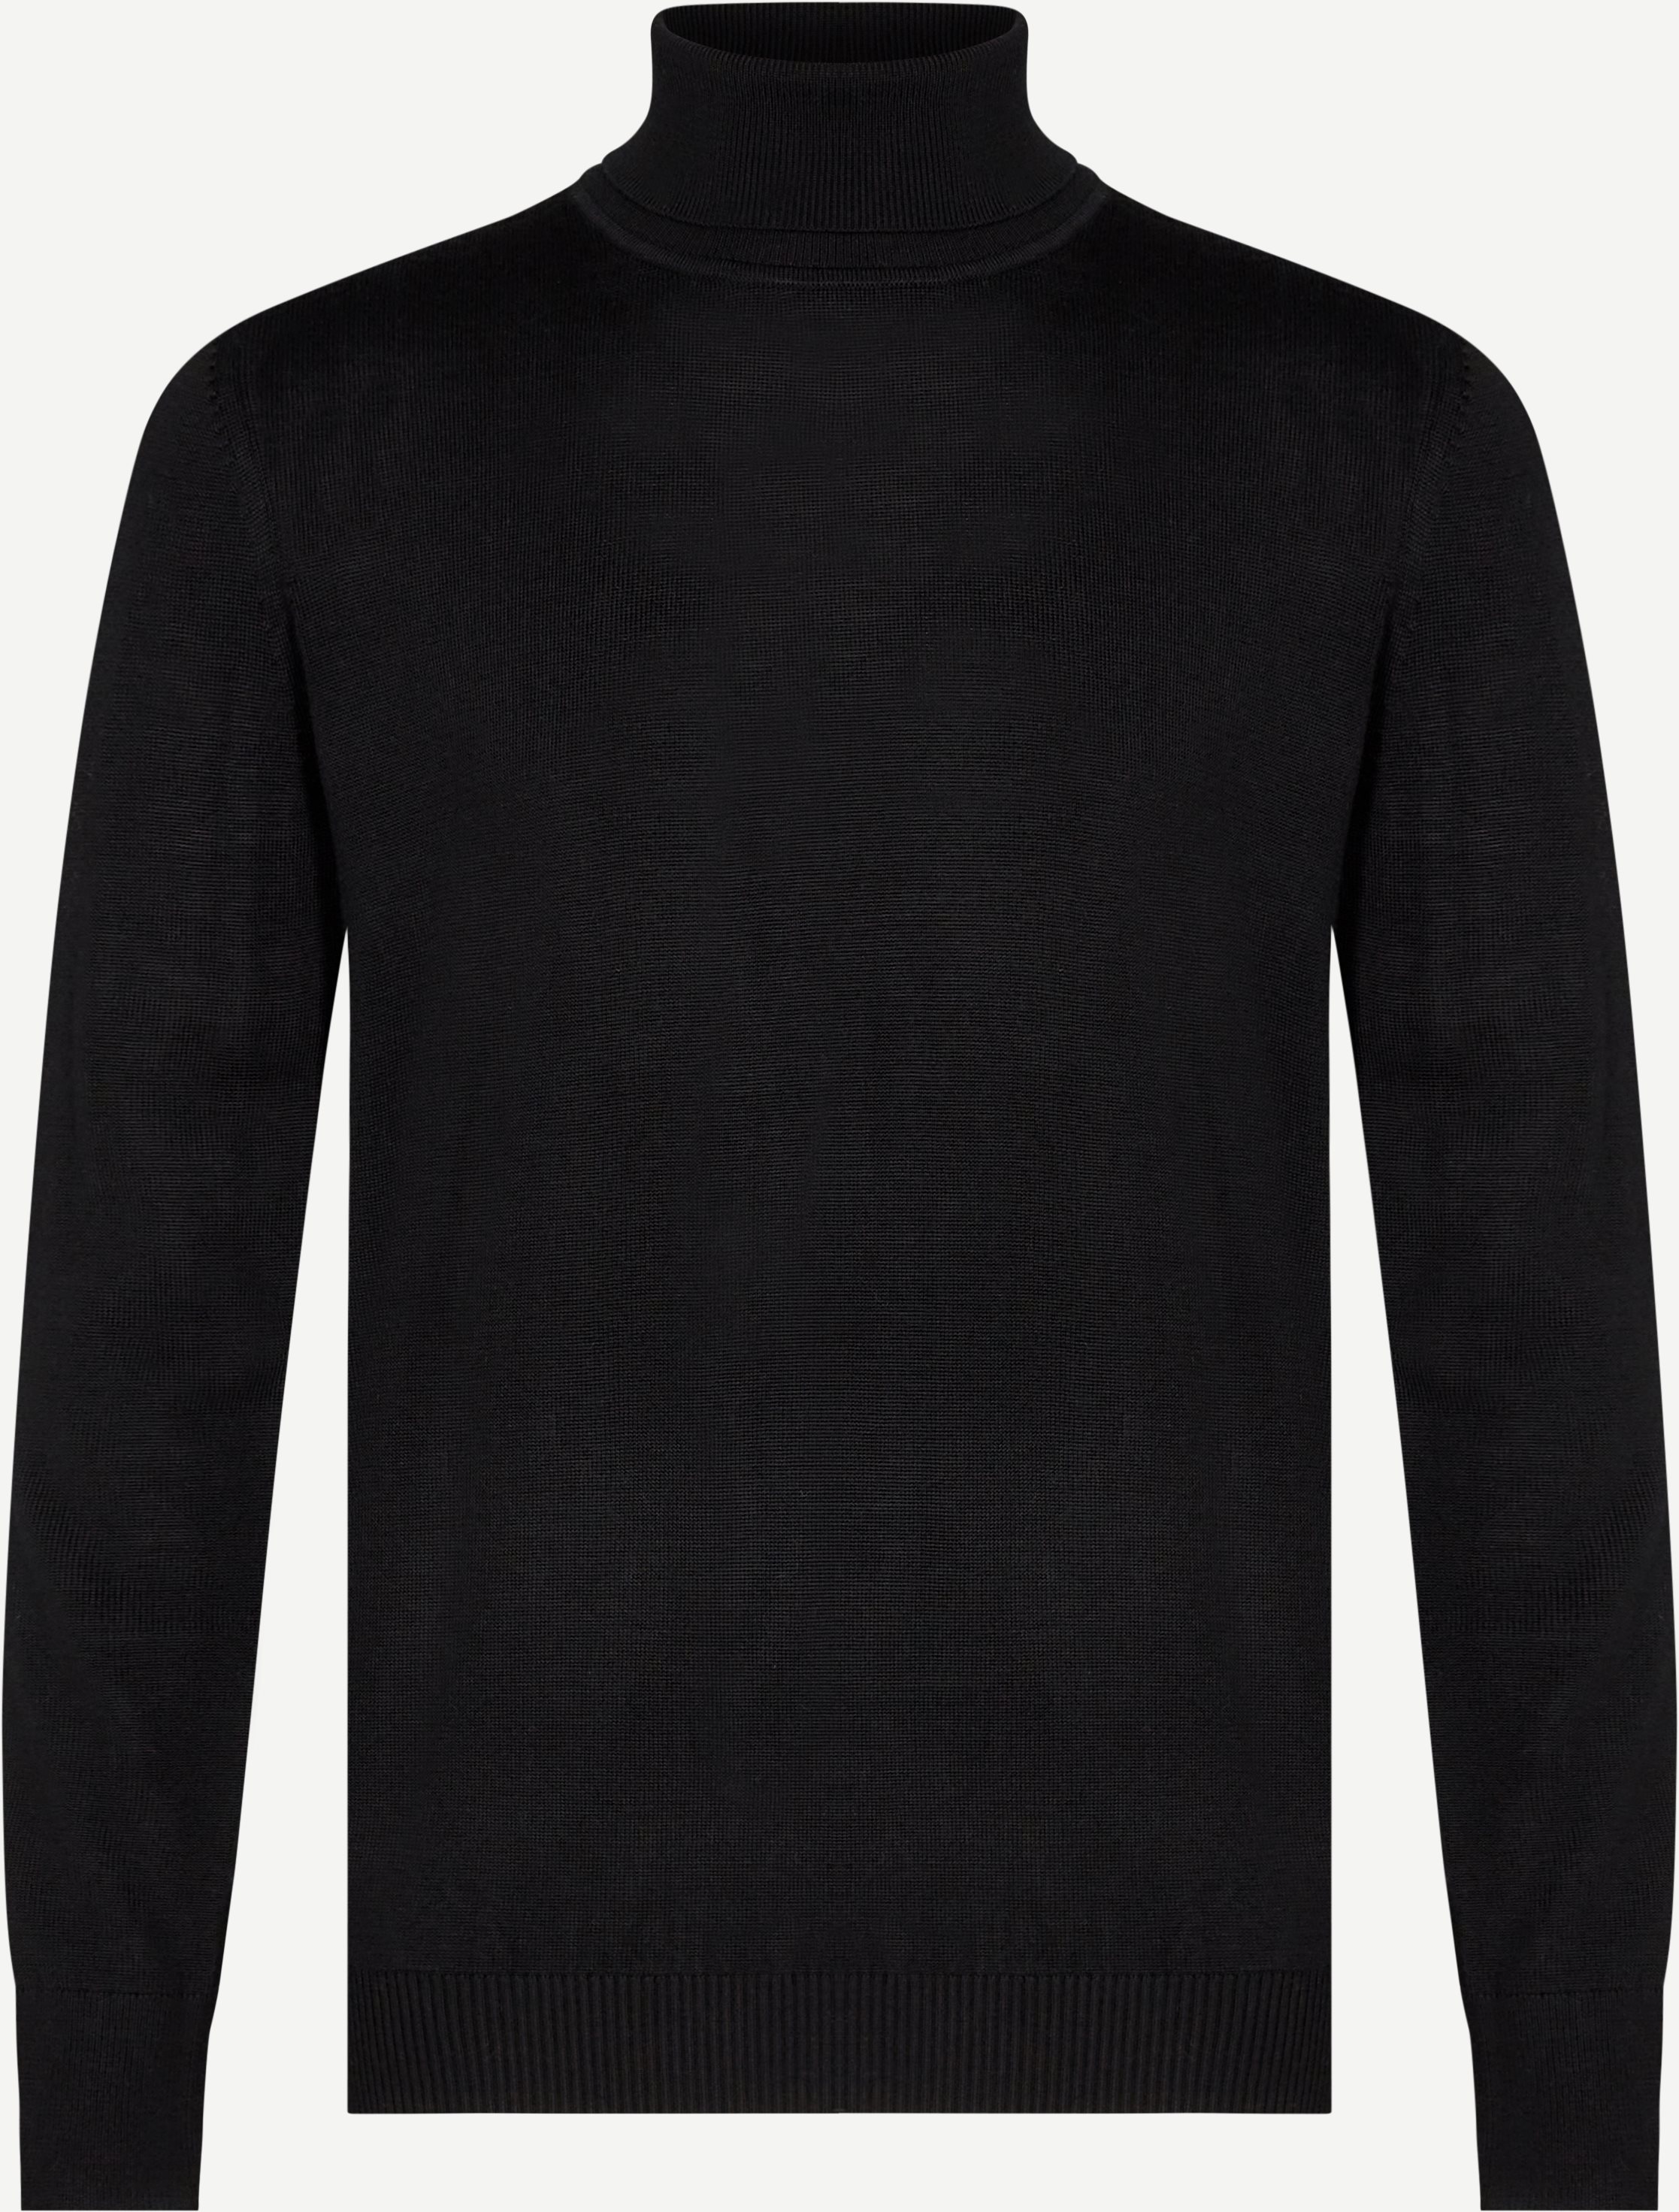 Saturn Rullekarave Strik - Knitwear - Regular fit - Black